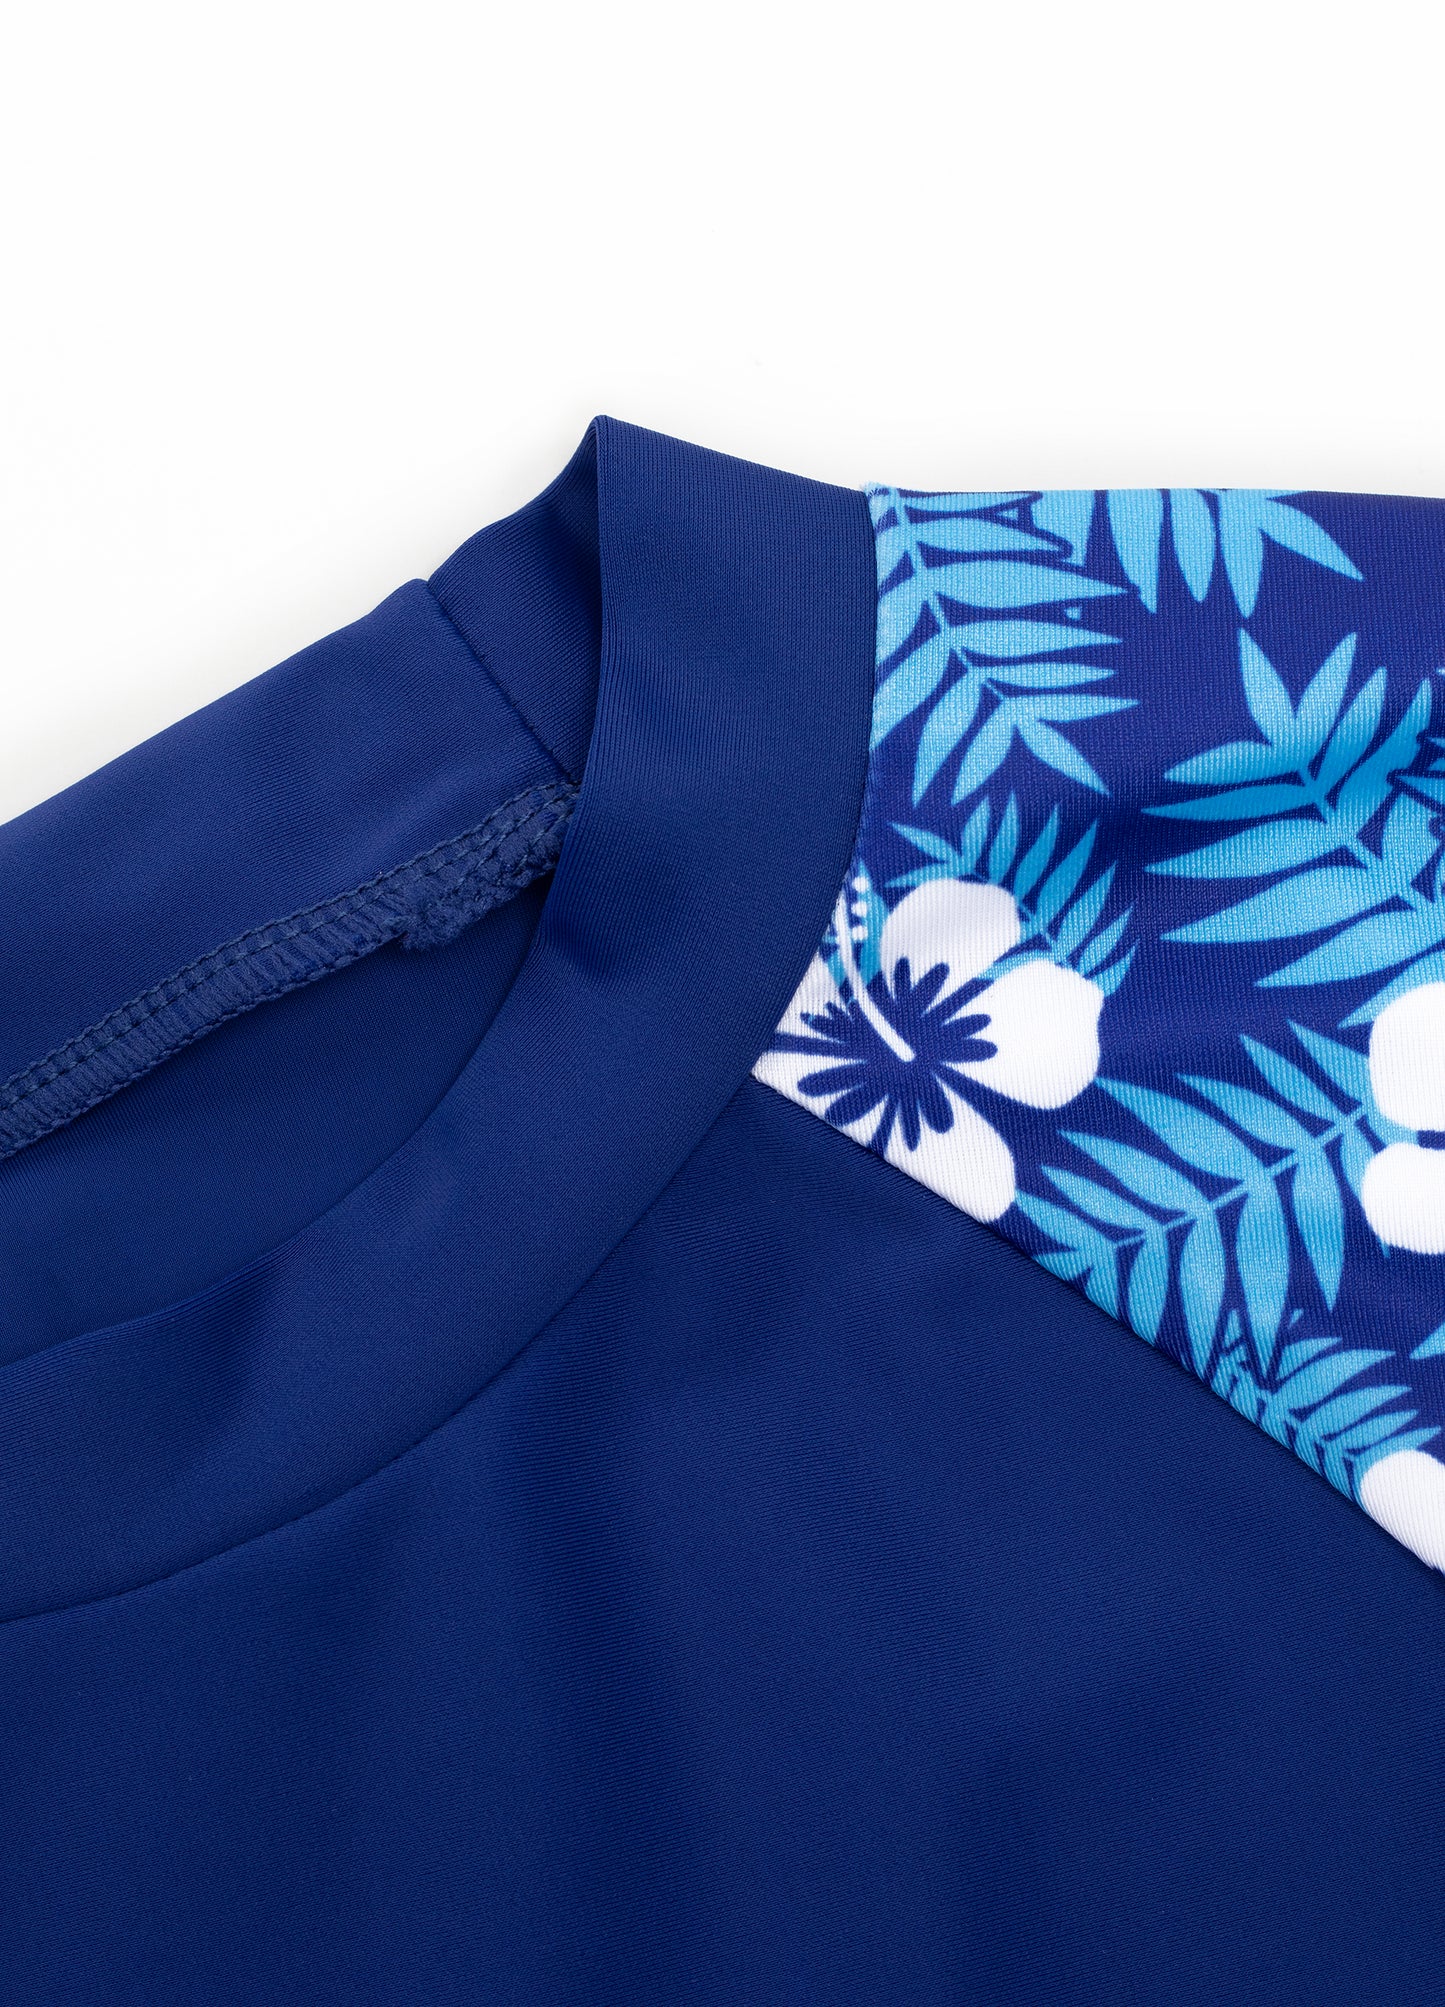 muslim swimming suits/islamic swimming suits/4POSE Women's Tropical Print Peplum Hem Full Coverage Swimsuit-Blue base match print pattern neckline